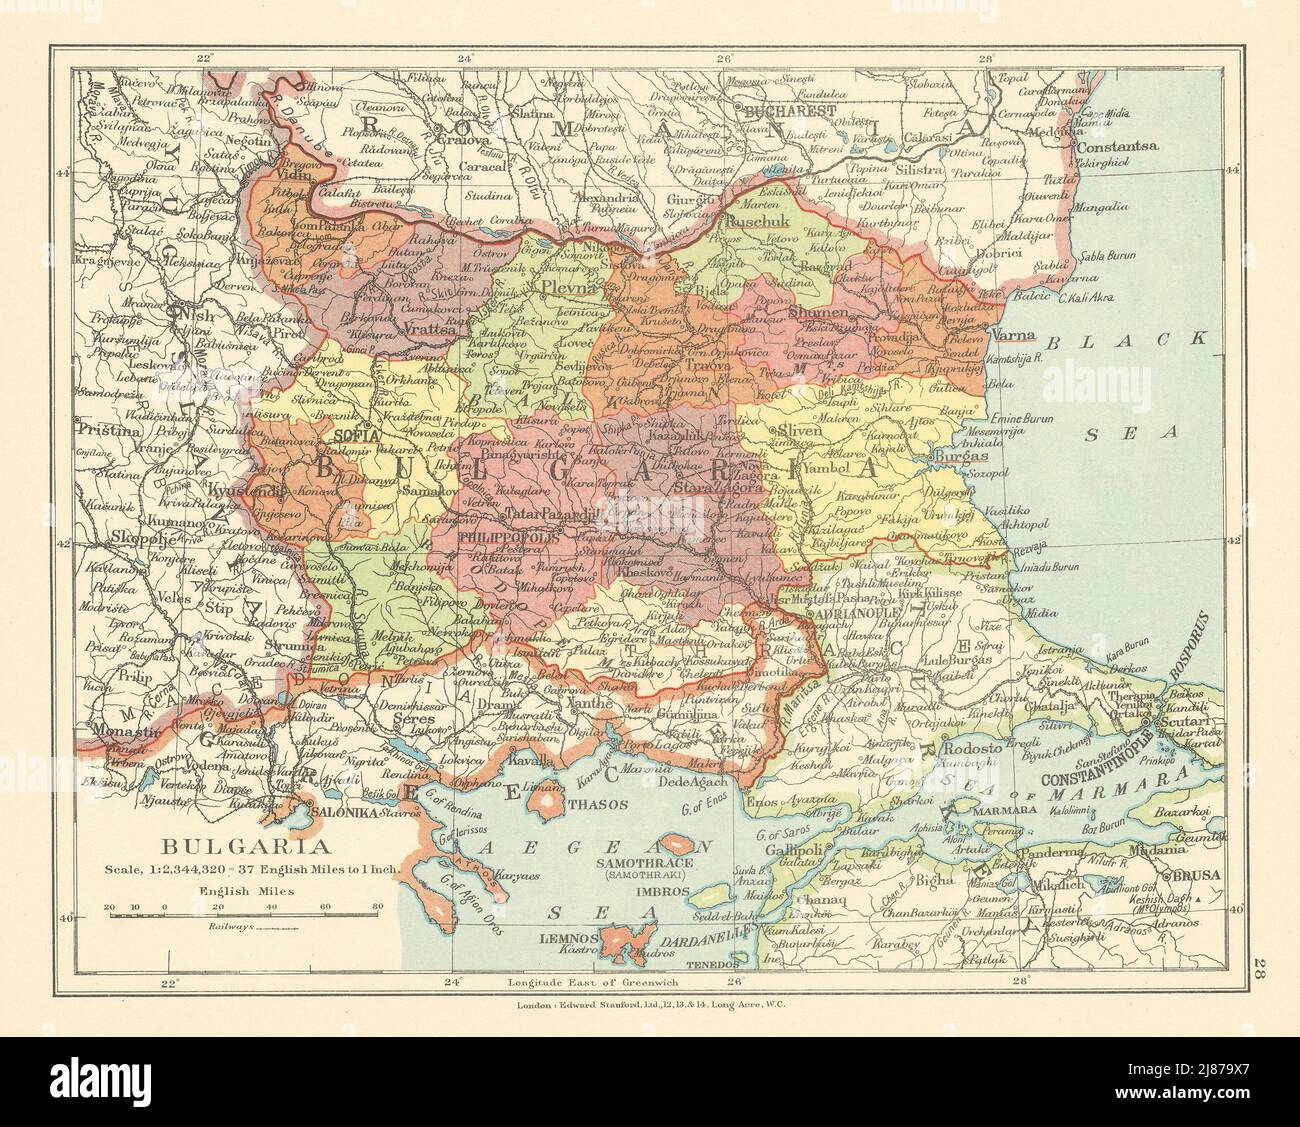 Bulgaria in Provinces. Thrace. European Turkey. STANFORD c1925 old vintage map Stock Photo